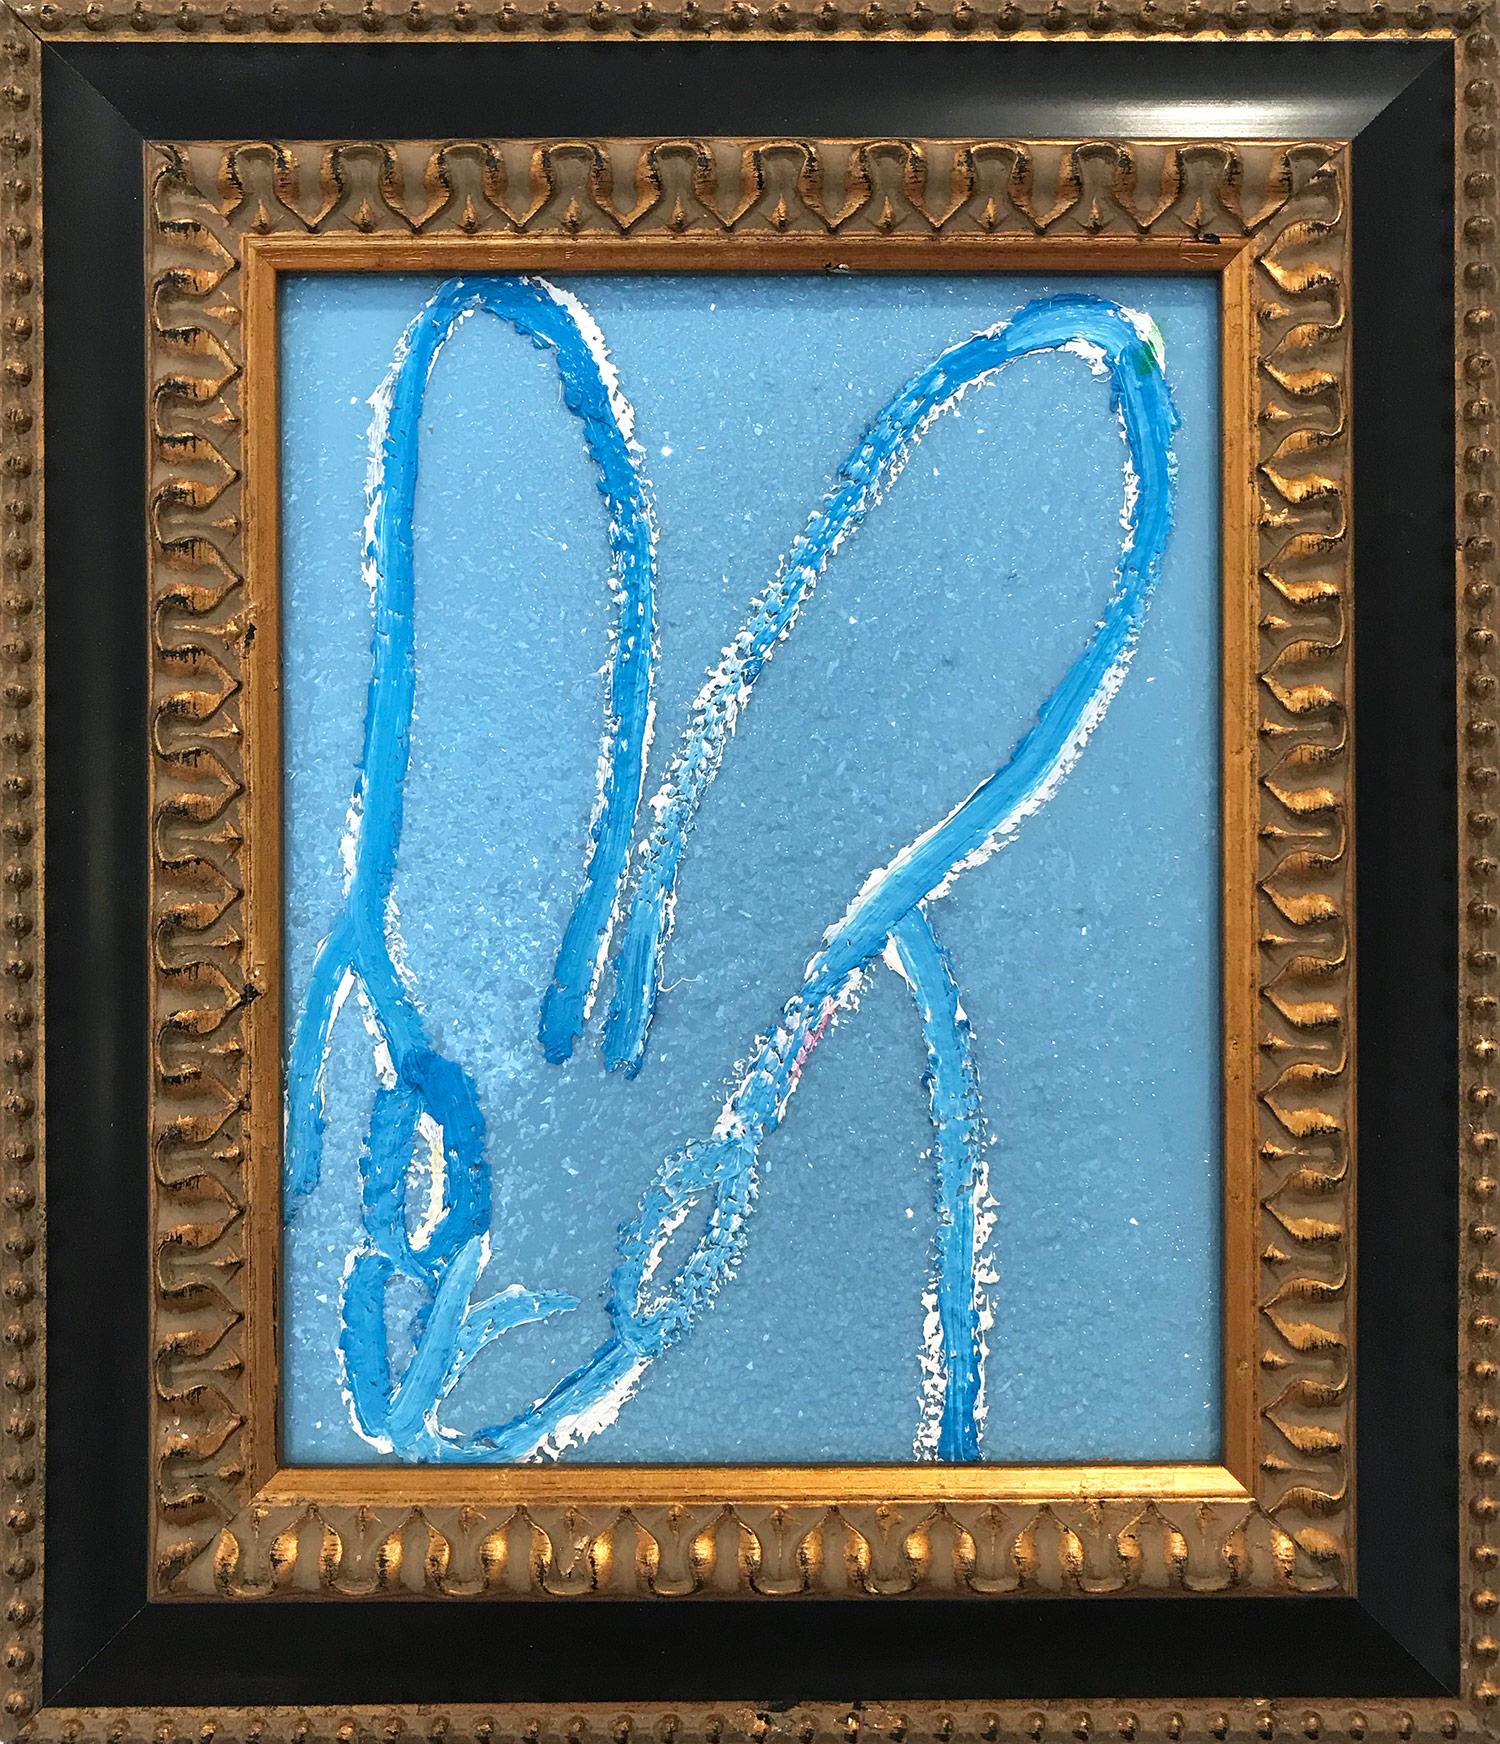 Hunt Slonem Abstract Painting - "Little Richard" (Diamond Dust Bunny on Light Blue)